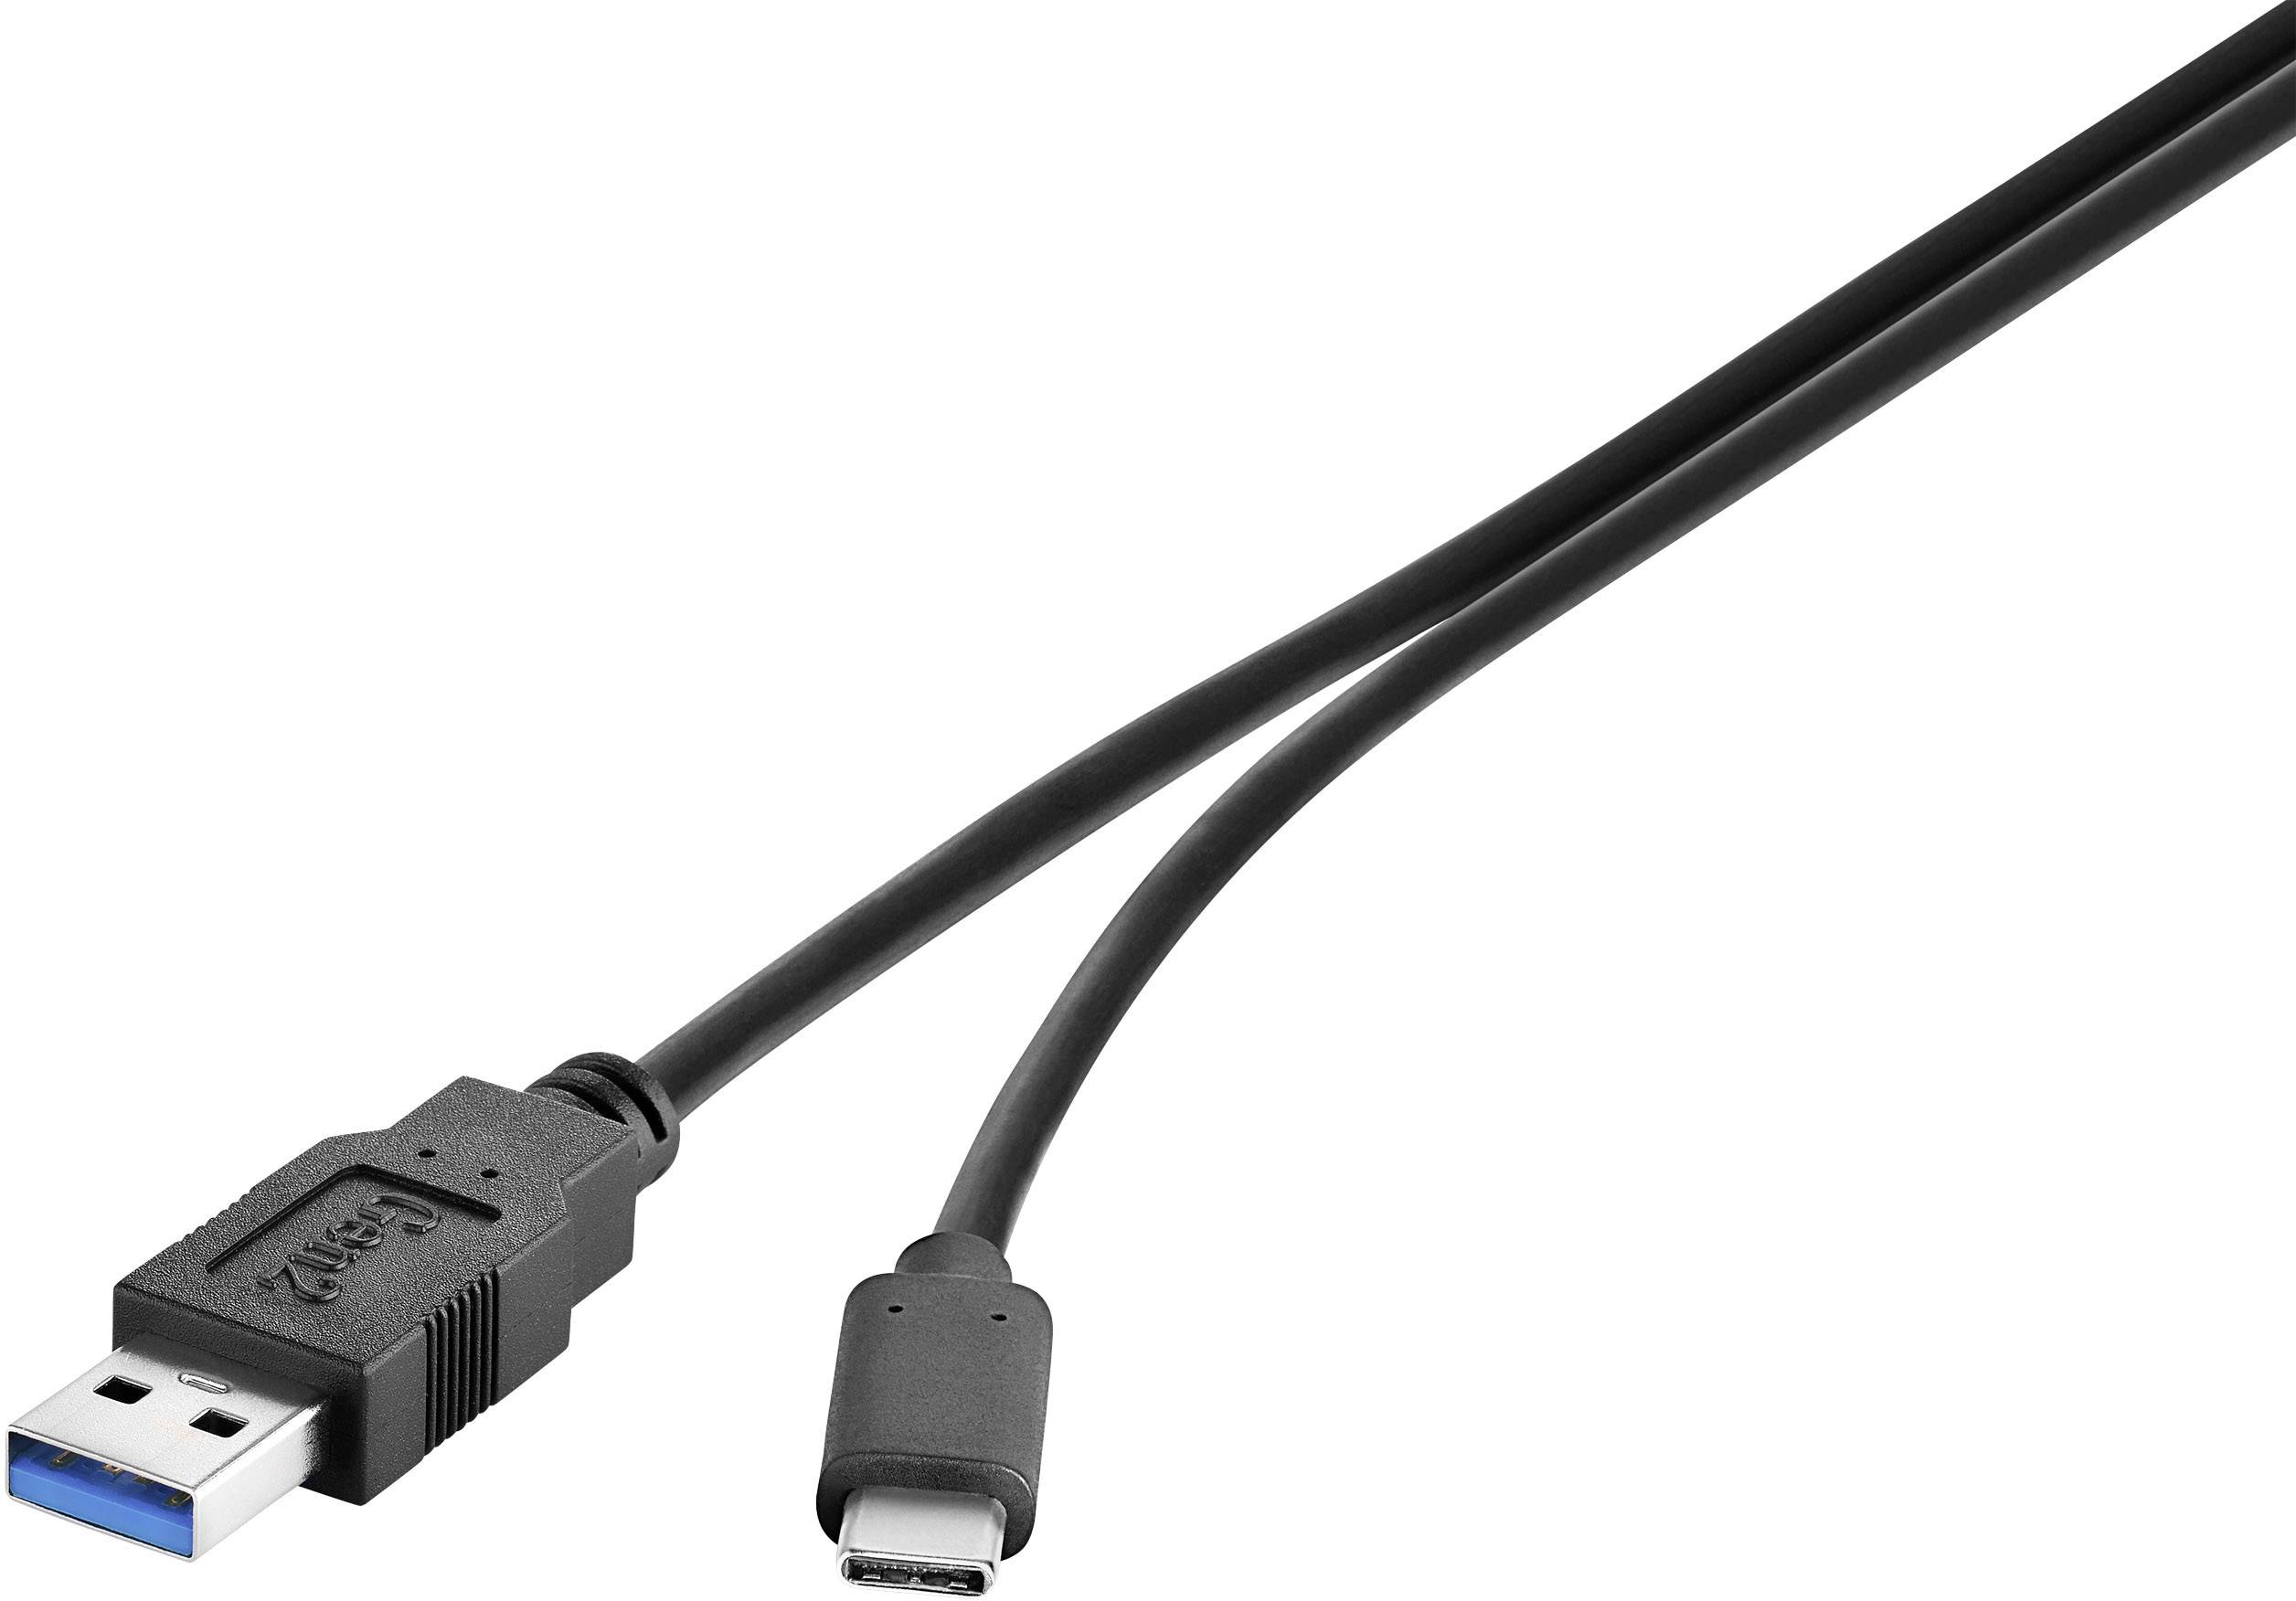 CONRAD Renkforce USB 3.1 Kabel [1x USB 3.0 Stecker A - 1x USB-C? Stecker] 1 m Schwarz UL-zertifizier